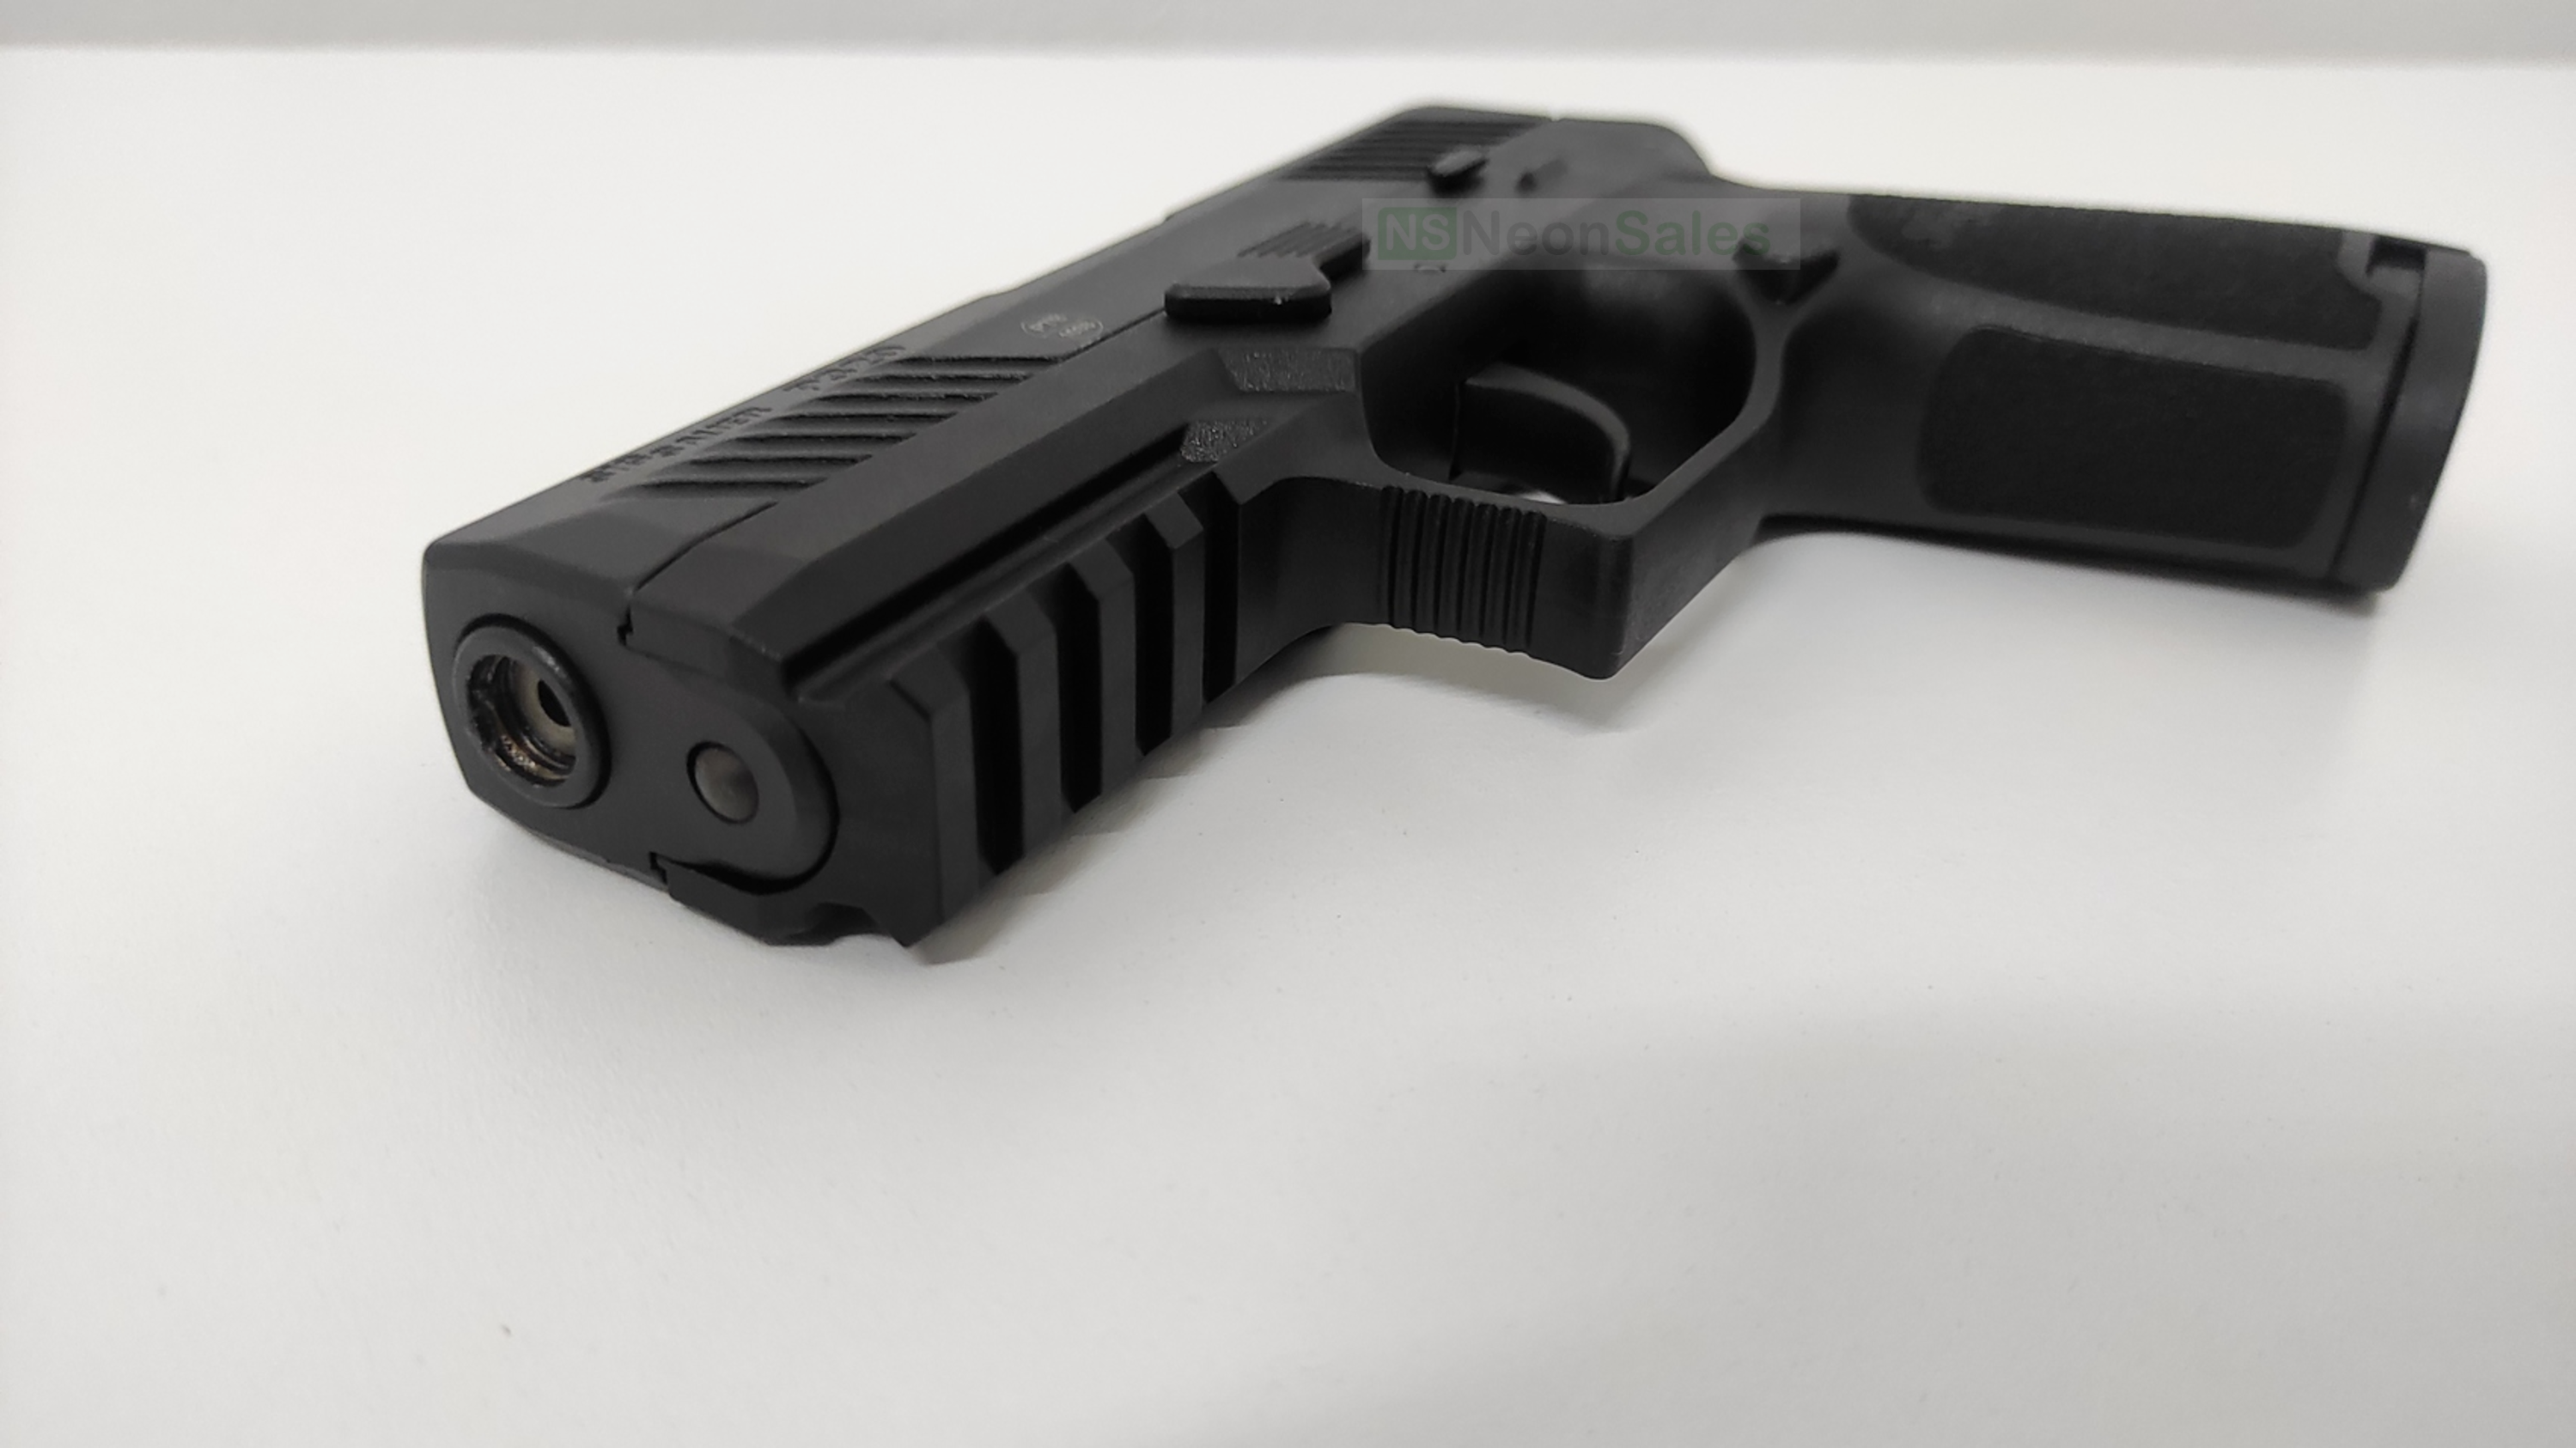 SIG SAUER P320 BLANK GUN - LICENSED REPLICA